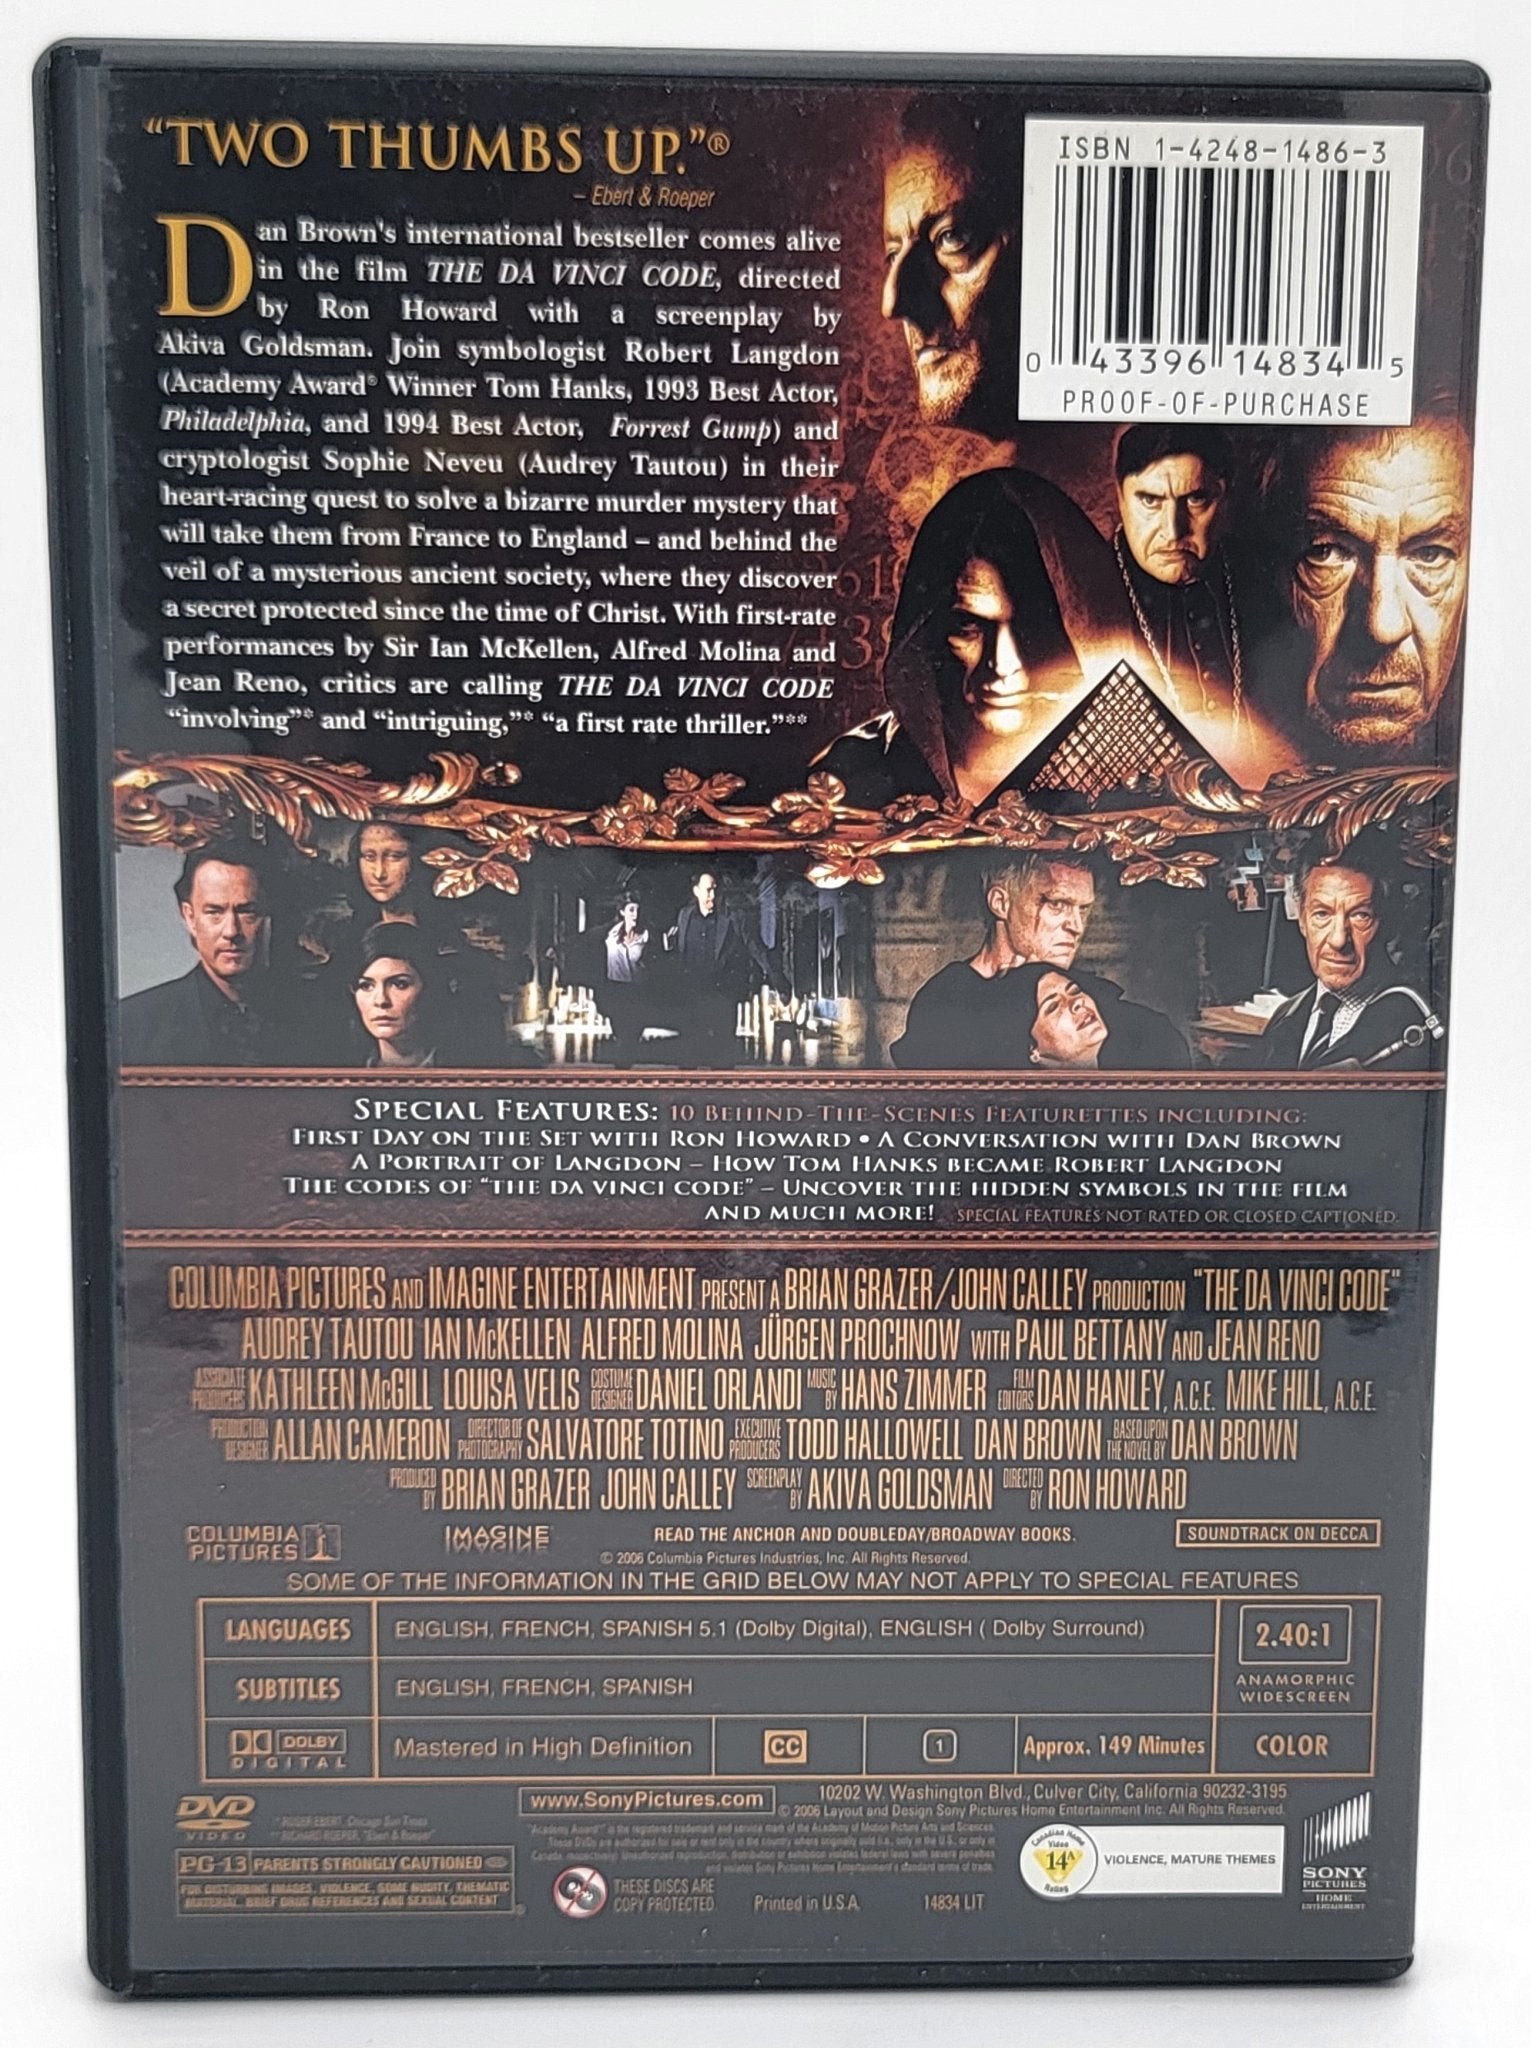 Columbia Pictures - The Da Vinci Code | DVD | Widescreen Special Edition - 2 Disc Set - DVD - Steady Bunny Shop